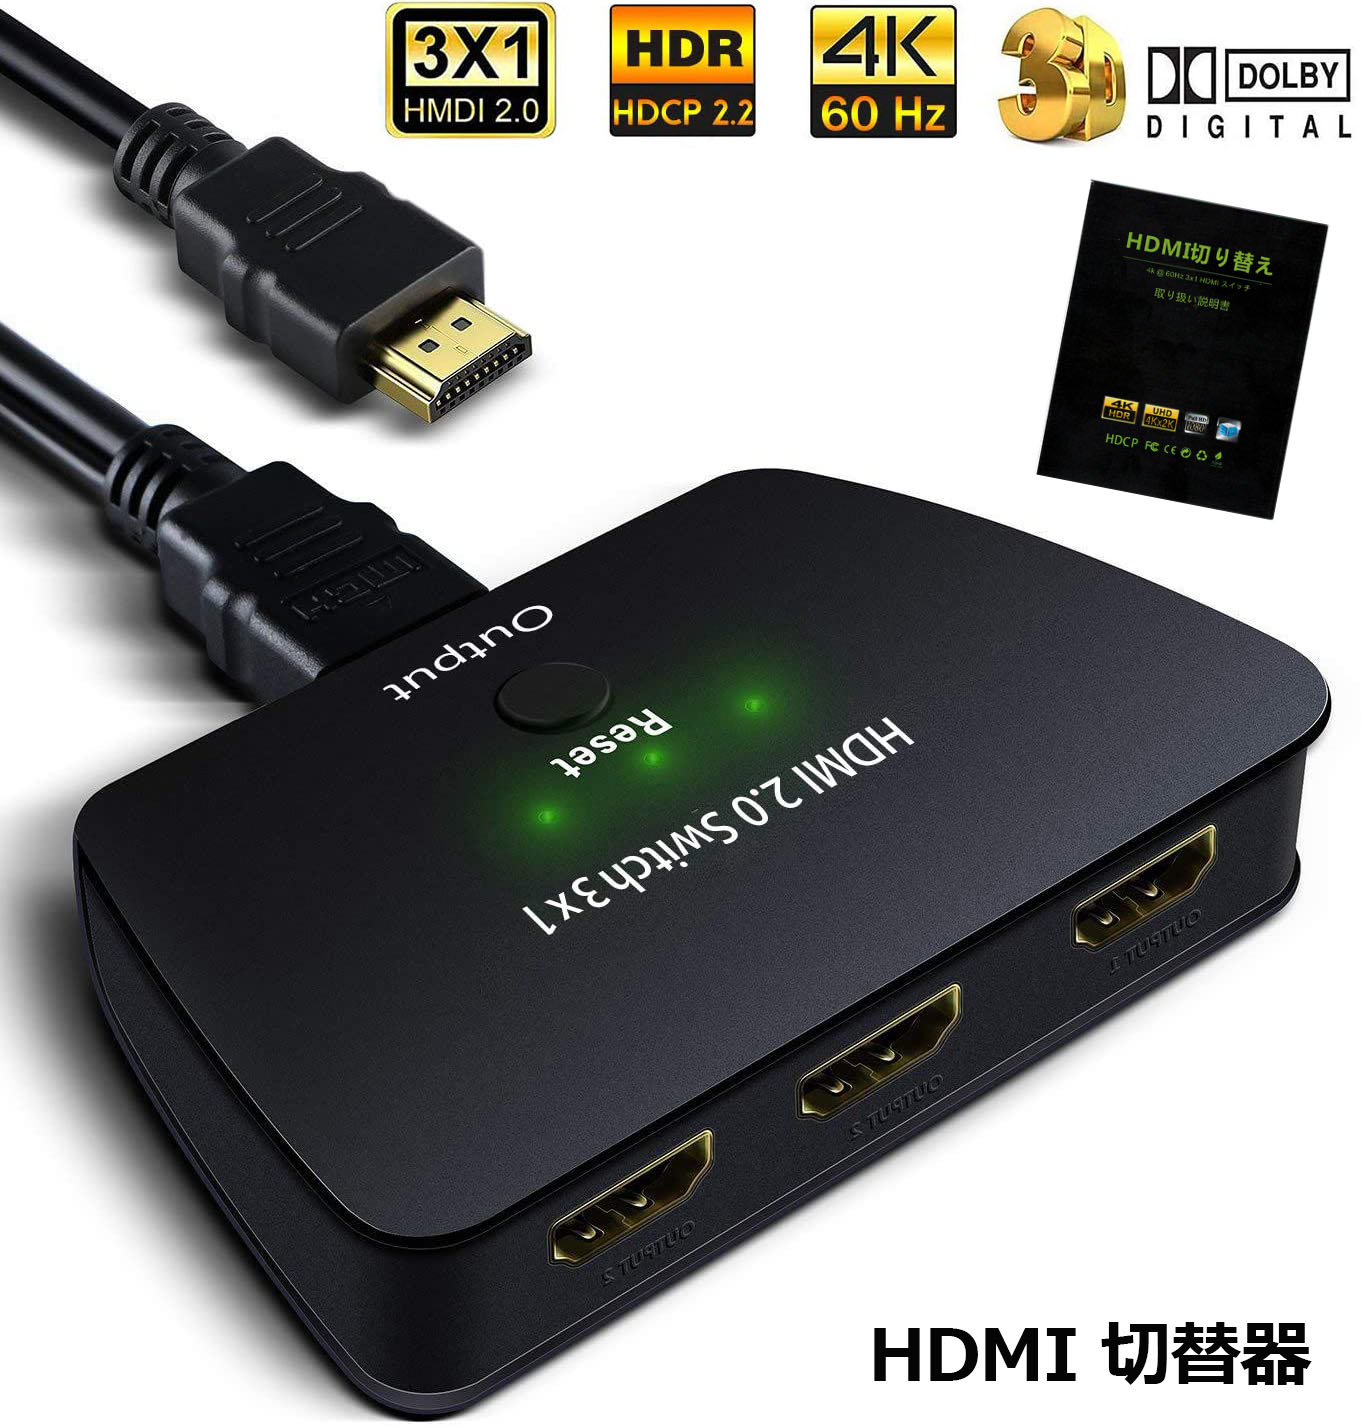 HDMI 切替器 スイッチ 分配器 HDMI2.0b HDR 4K@60Hz 3入力1出力 HDMI切り替え器 HDMIスイッチャー Apple TV  4K、Fire Stick、HDTV、PS4、ゲーム機、PC、4K、3D、HDCP2.2、HDMI2.0、HDR をサポート 電源USBケーブル付き  日本語説明書付き